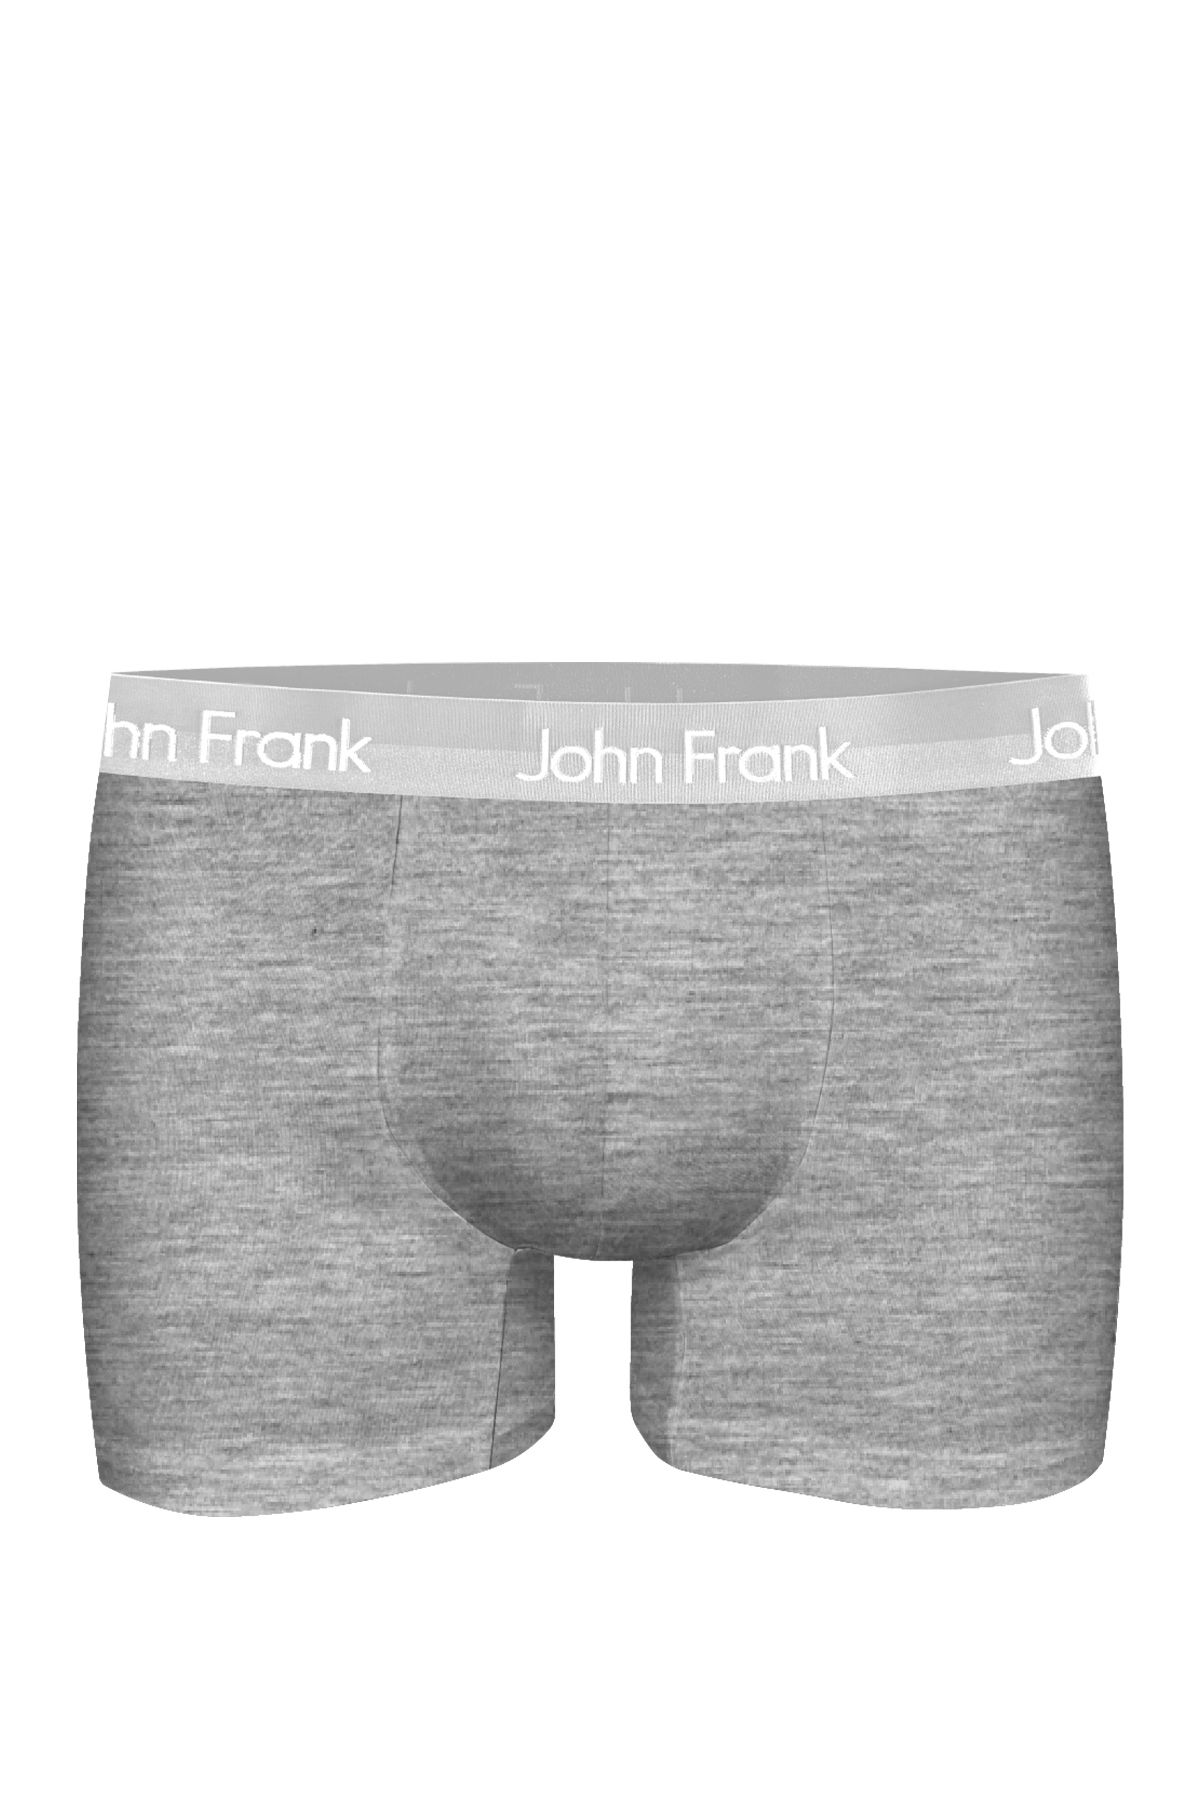 John Frank JOH FRANK PREMIUM BLACK BOXER GRİ MELANJ-GRİ